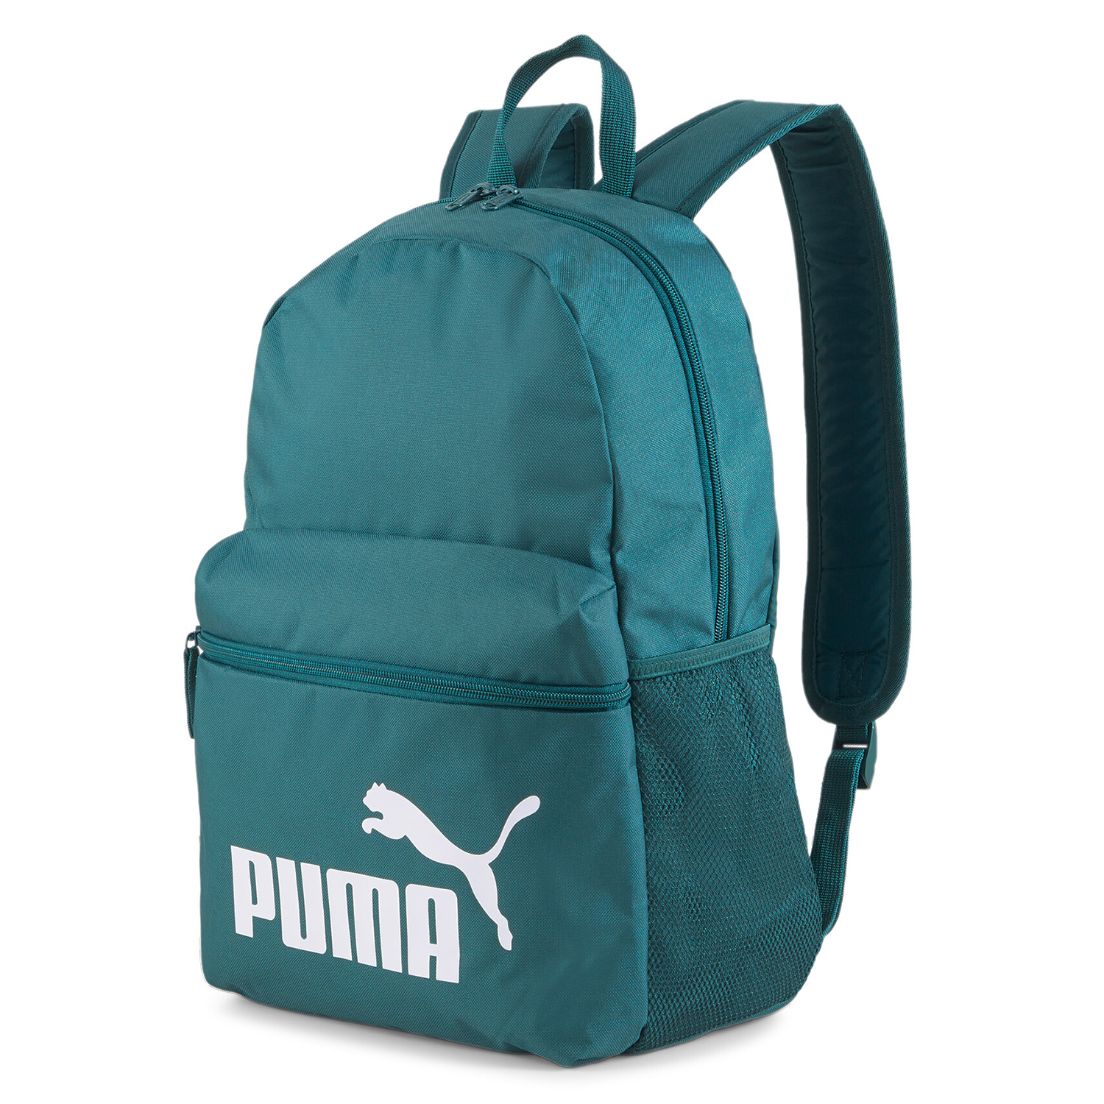 Estoy orgulloso Convención Materialismo Mochila Puma Phase Backpack 22 Litros - Sporting